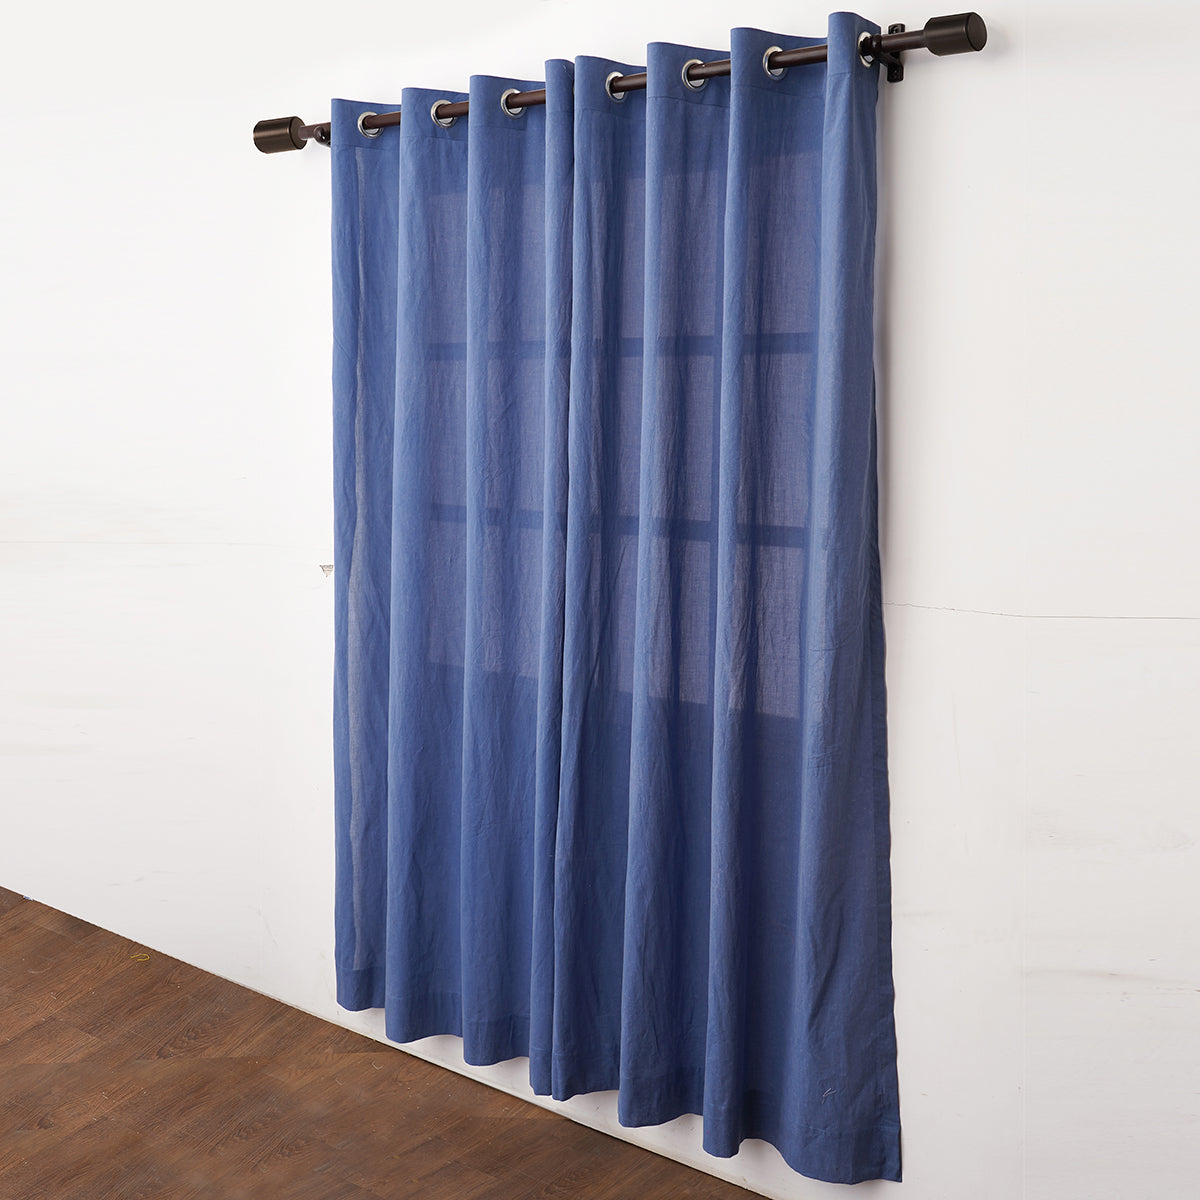 Curtain, Sheer cotton voile, denim blue, window panel, home decor, sizes available